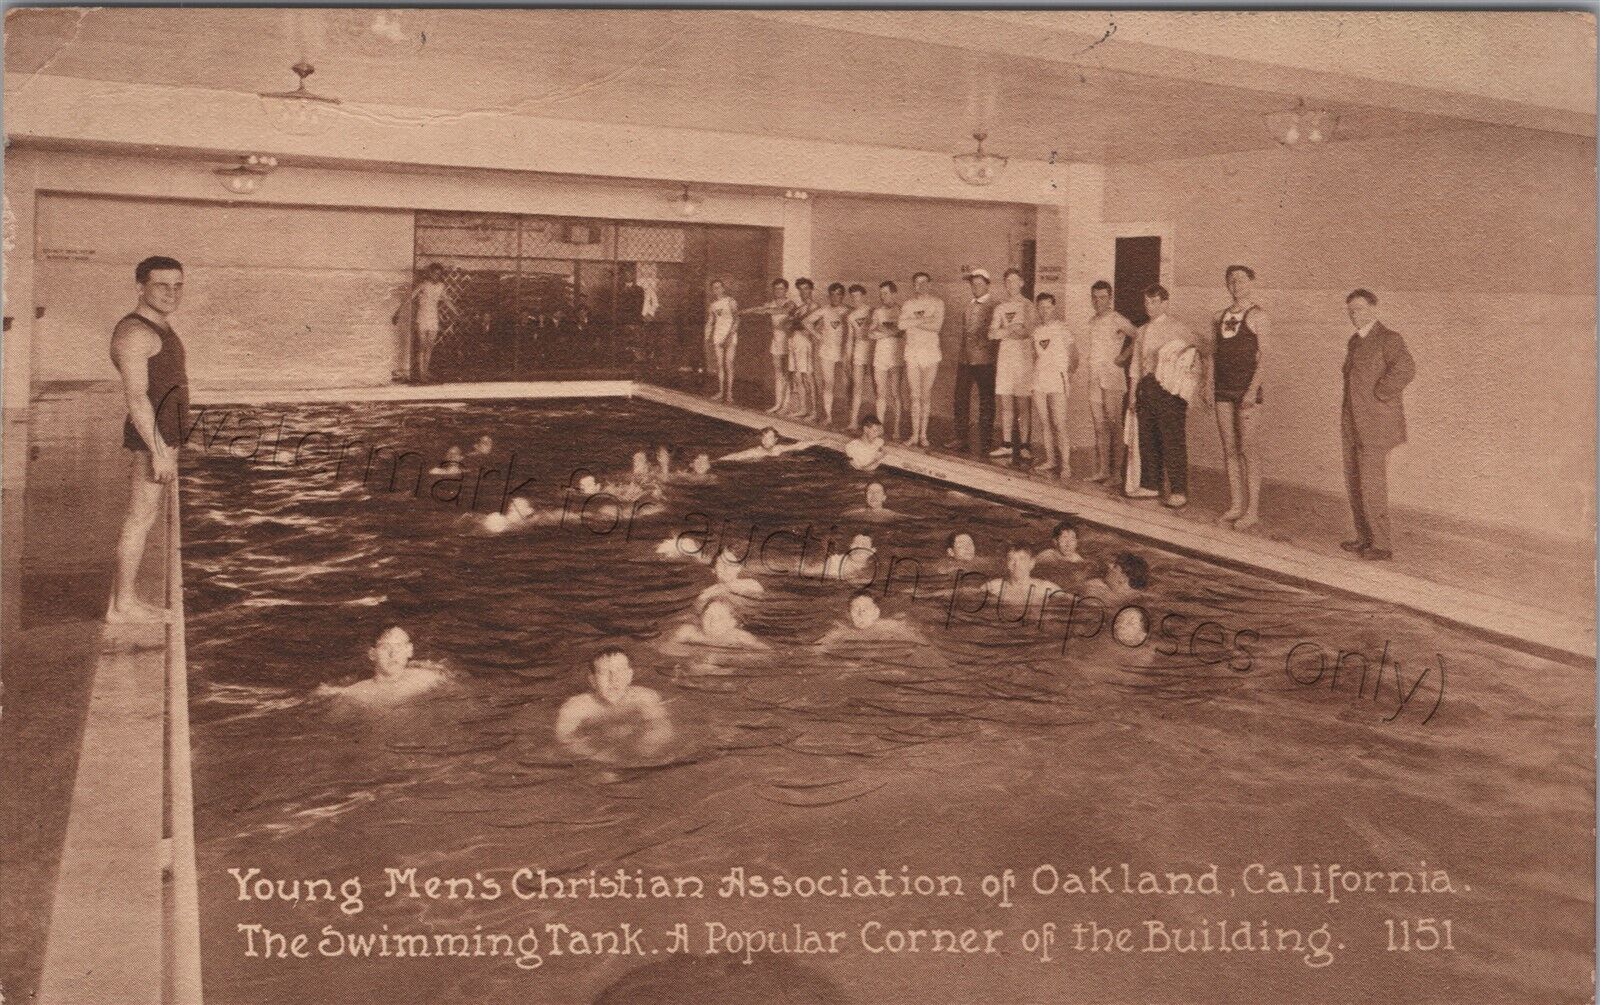 Oakland, CA: 1911 YMCA Swimming Pool - Vintage California Postcard